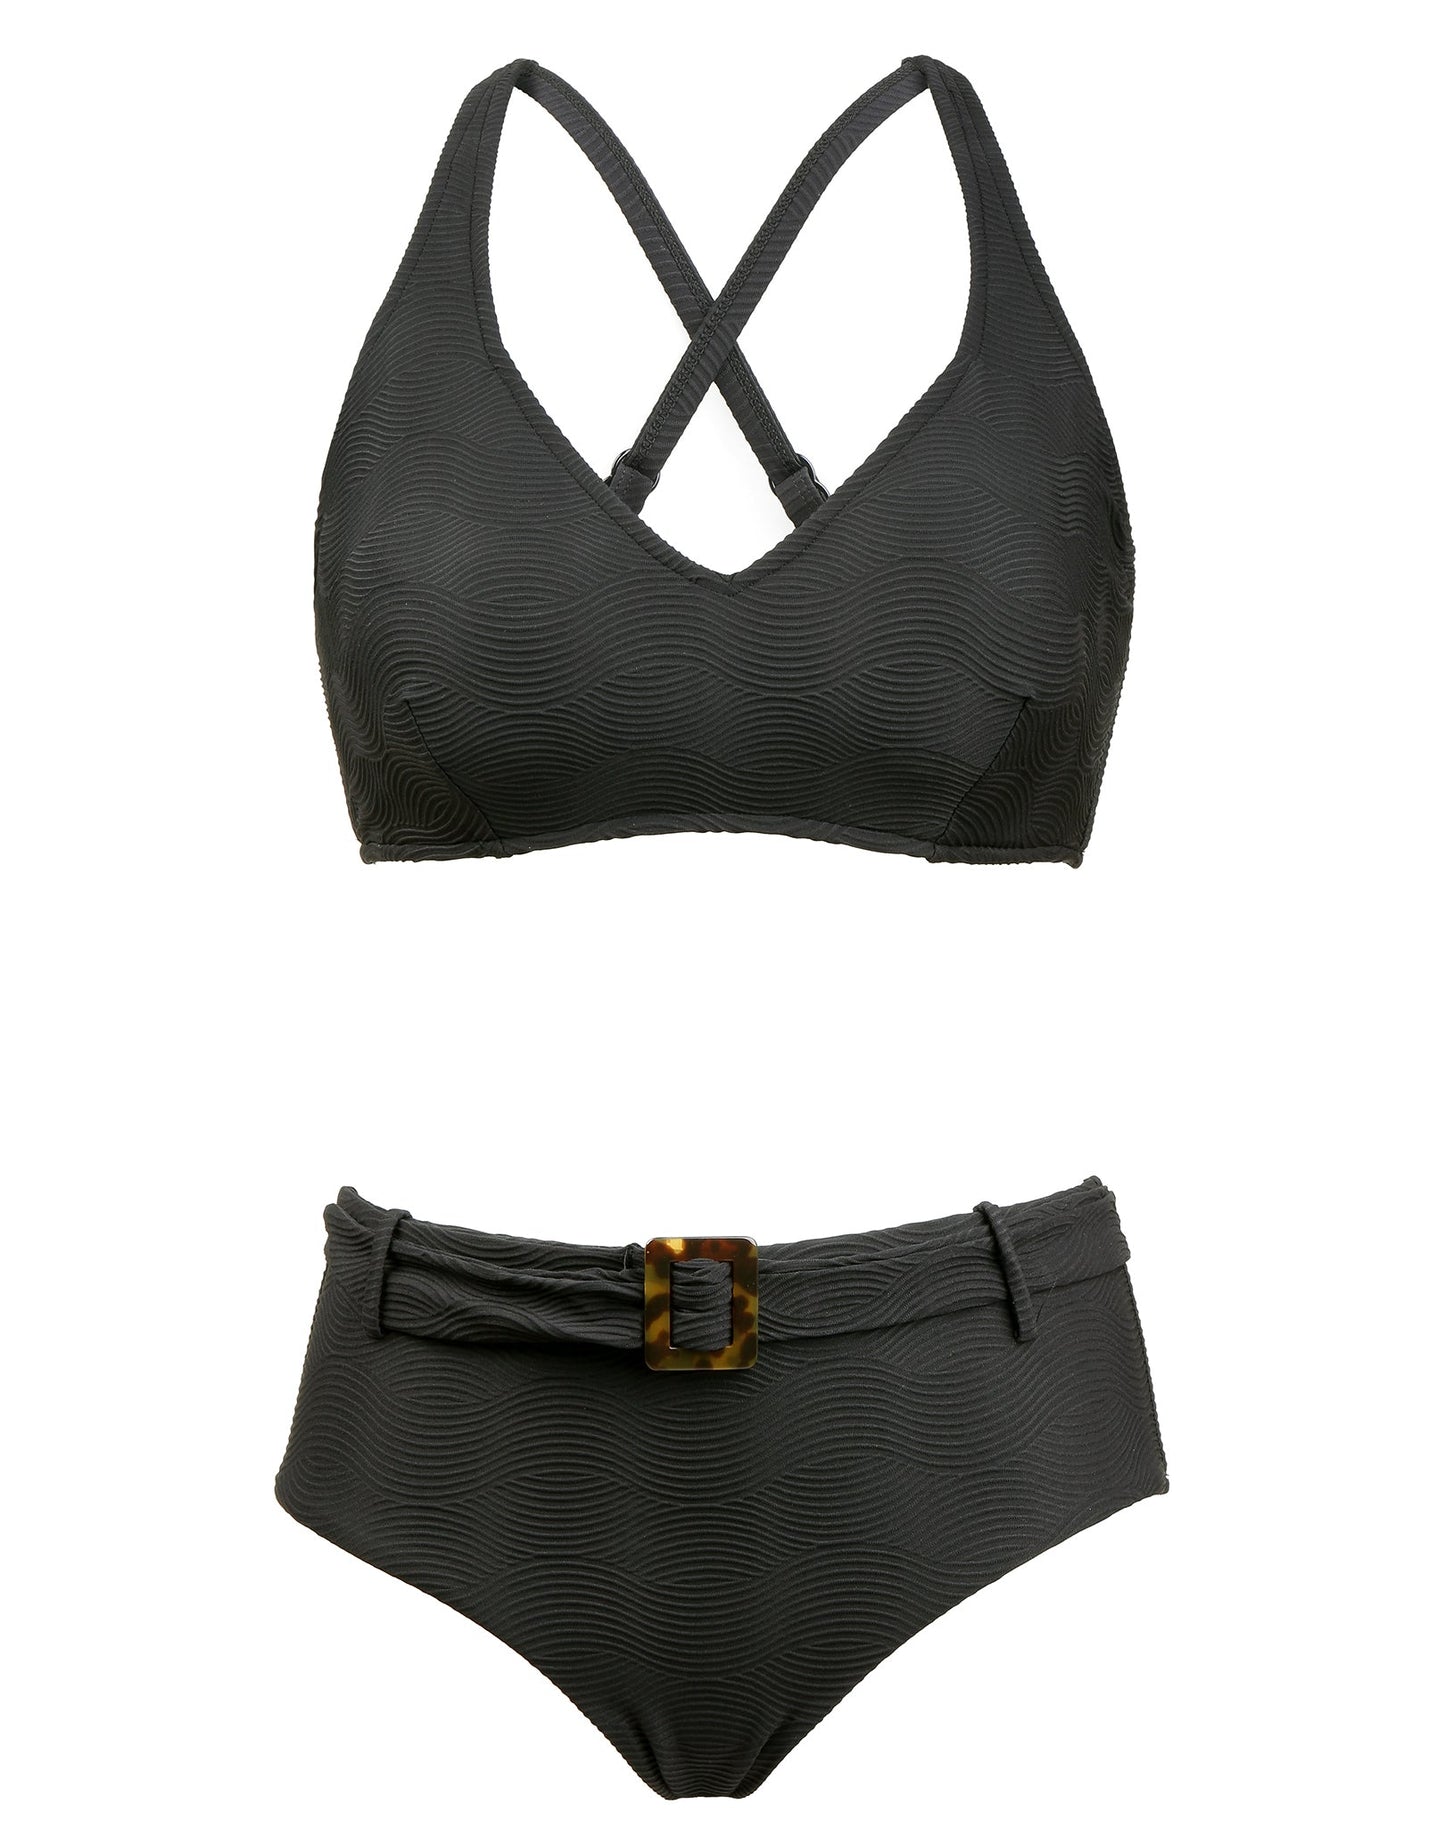 Seafolly Capri Sea F Cup Halter Bra Bikini Top - Black